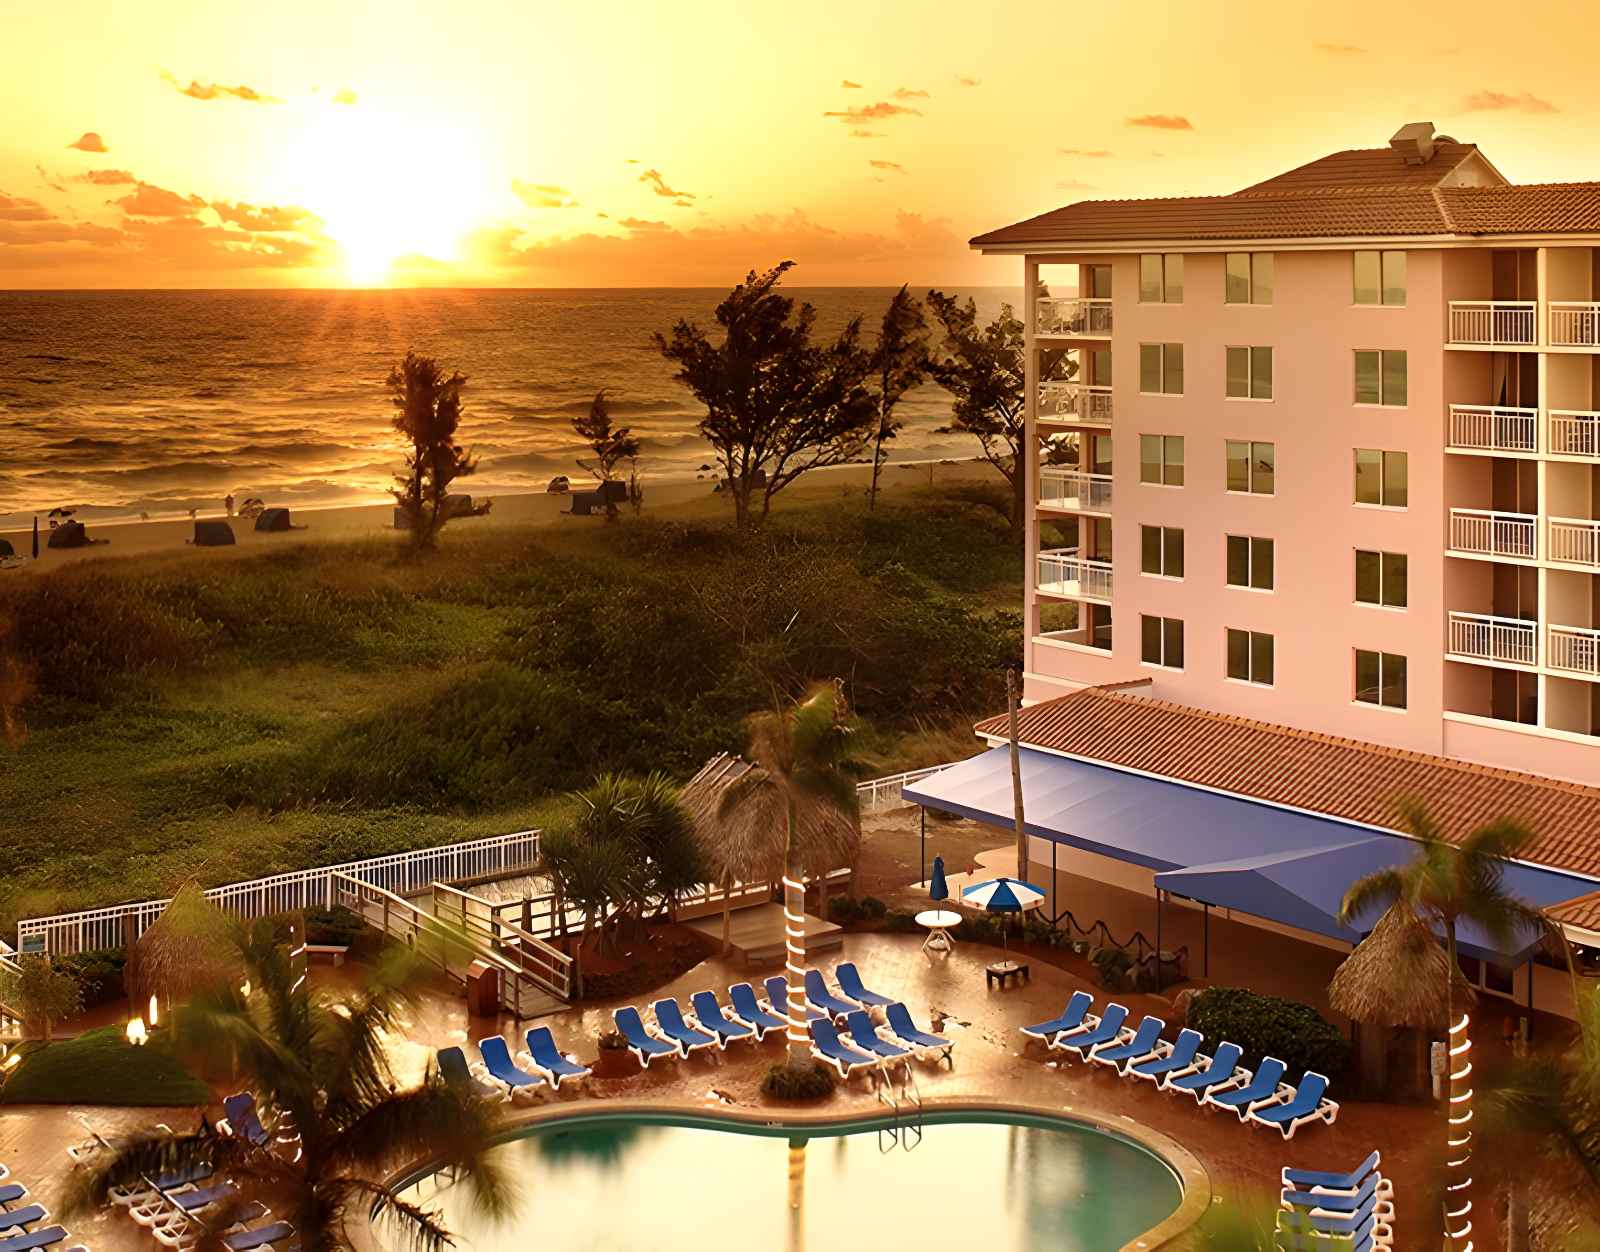 Best Beach Resorts in Florida Palm Beach Shores Resort and Vacation Villas2